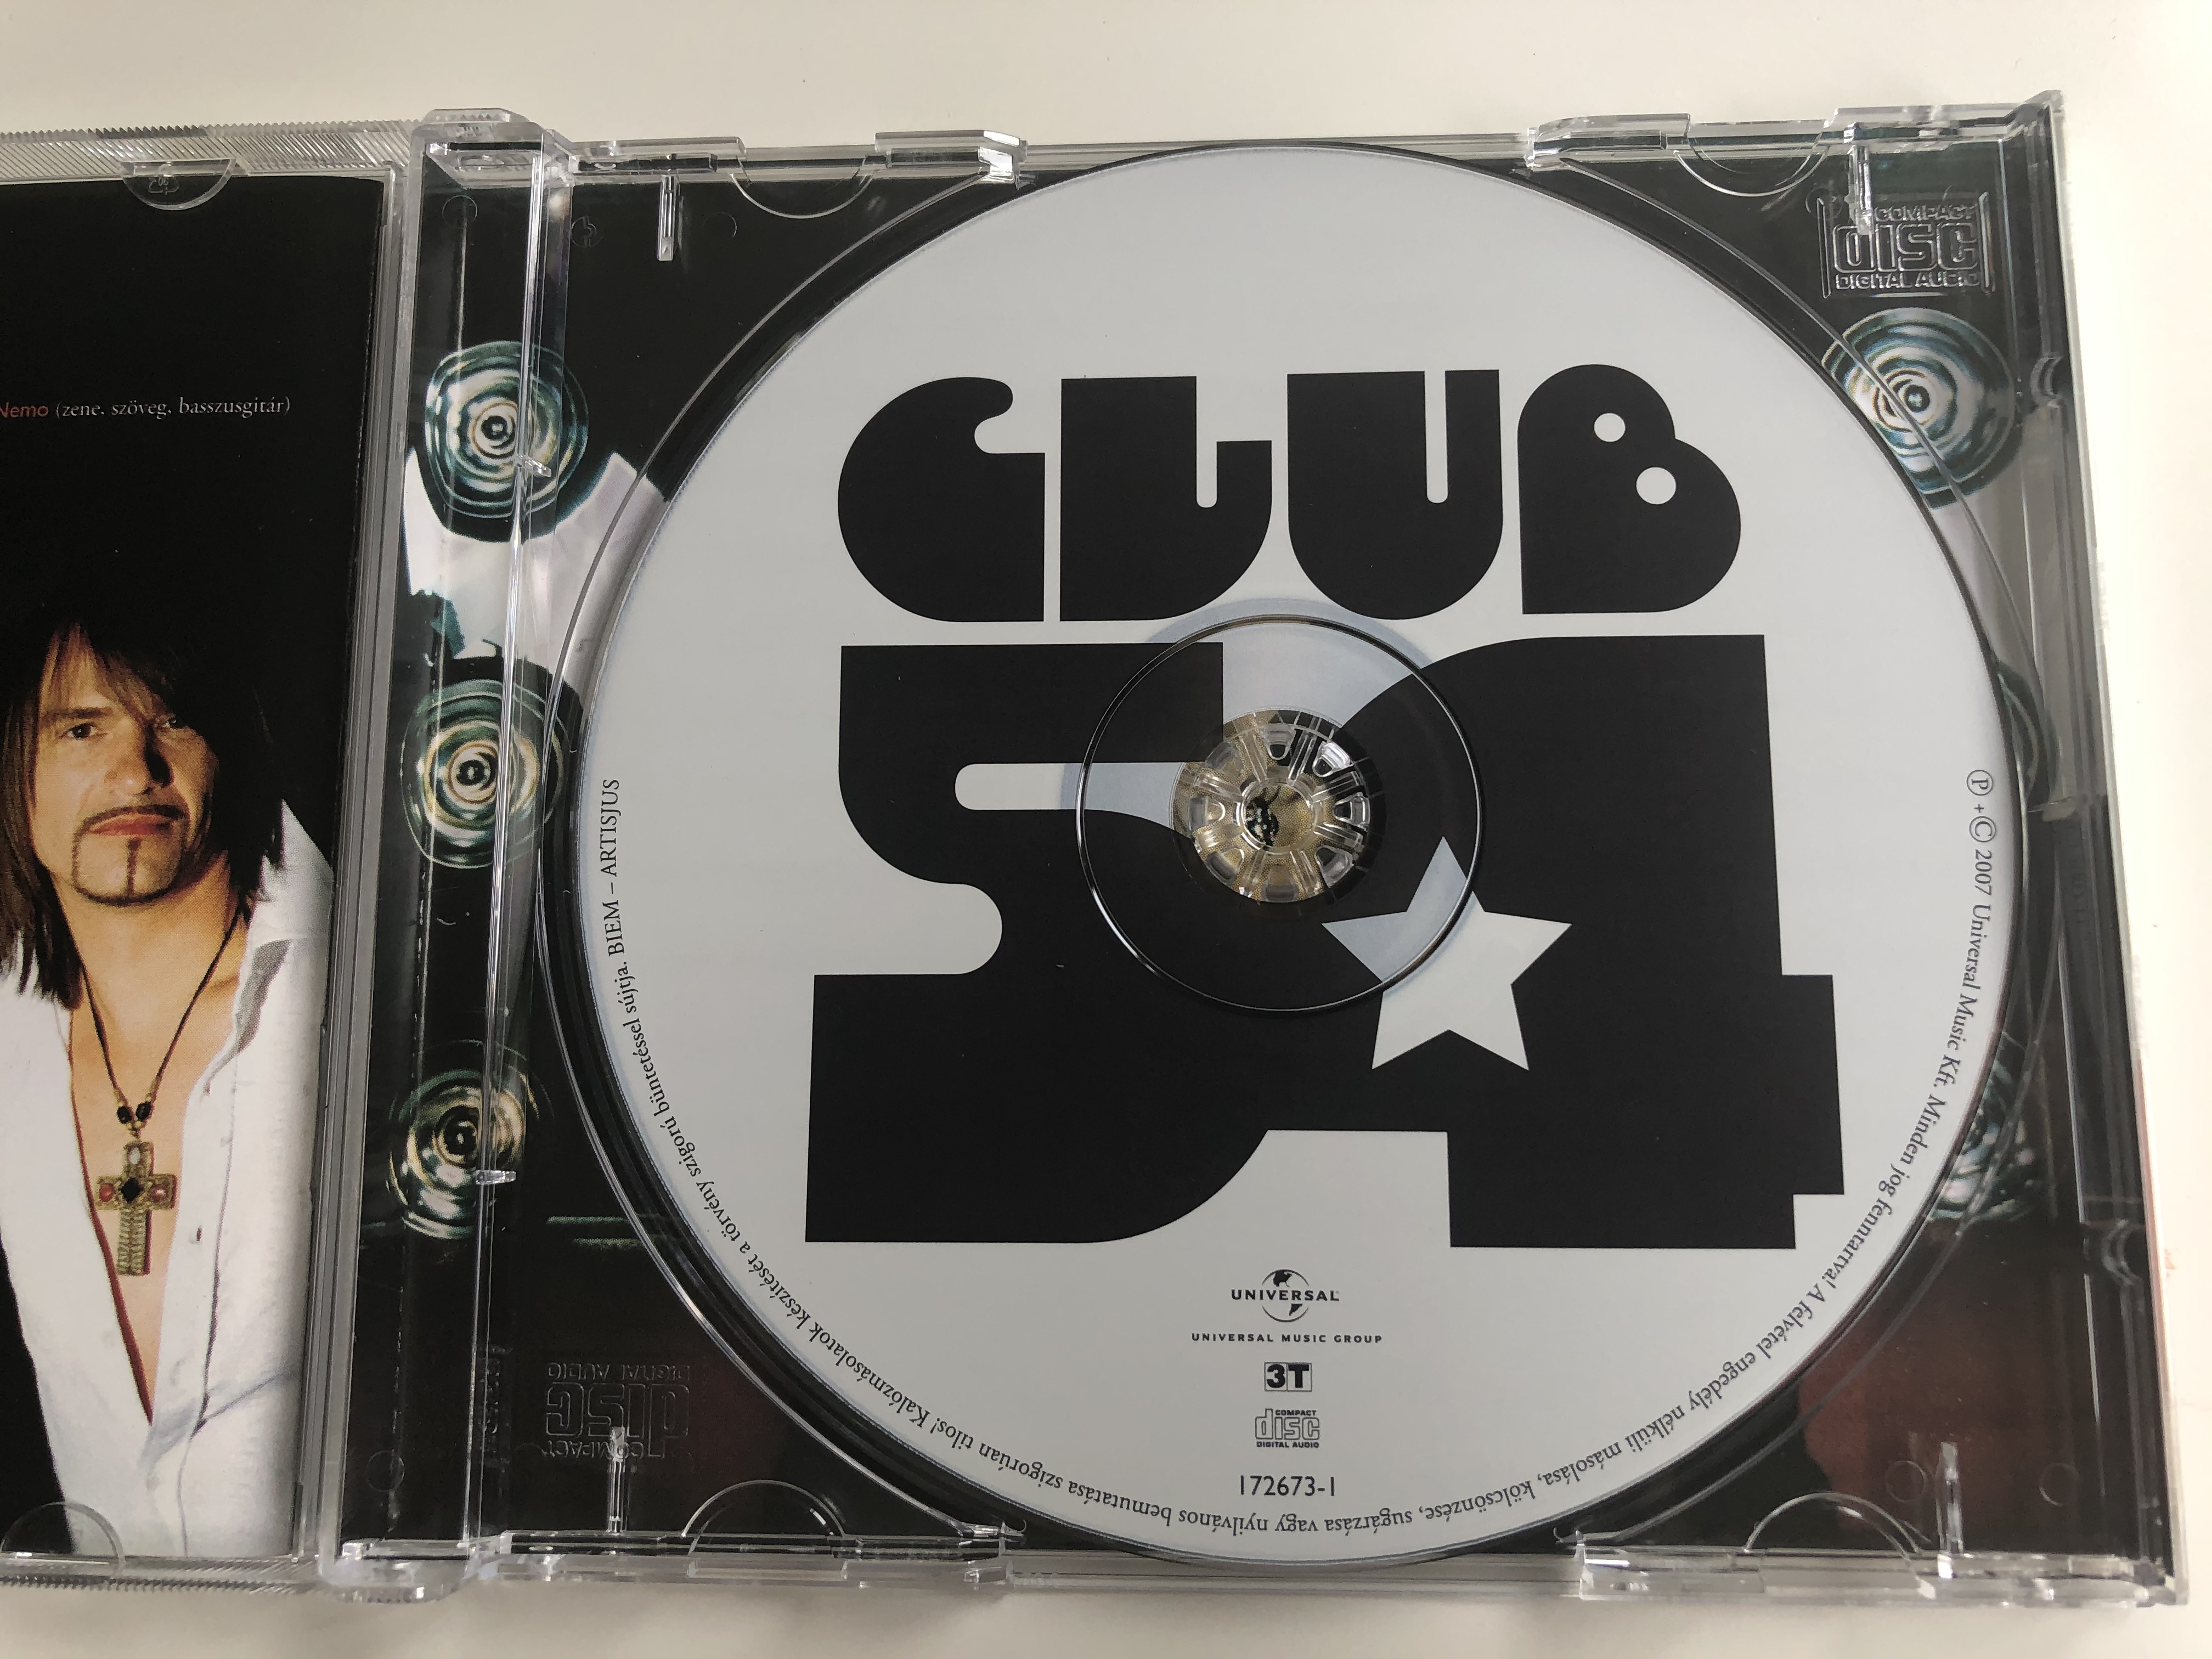 club-54-rajta-a-ne-felejtsd-el-cimu-dal-a-listak-elerol-3t-audio-cd-2007-172673-1-6-.jpg